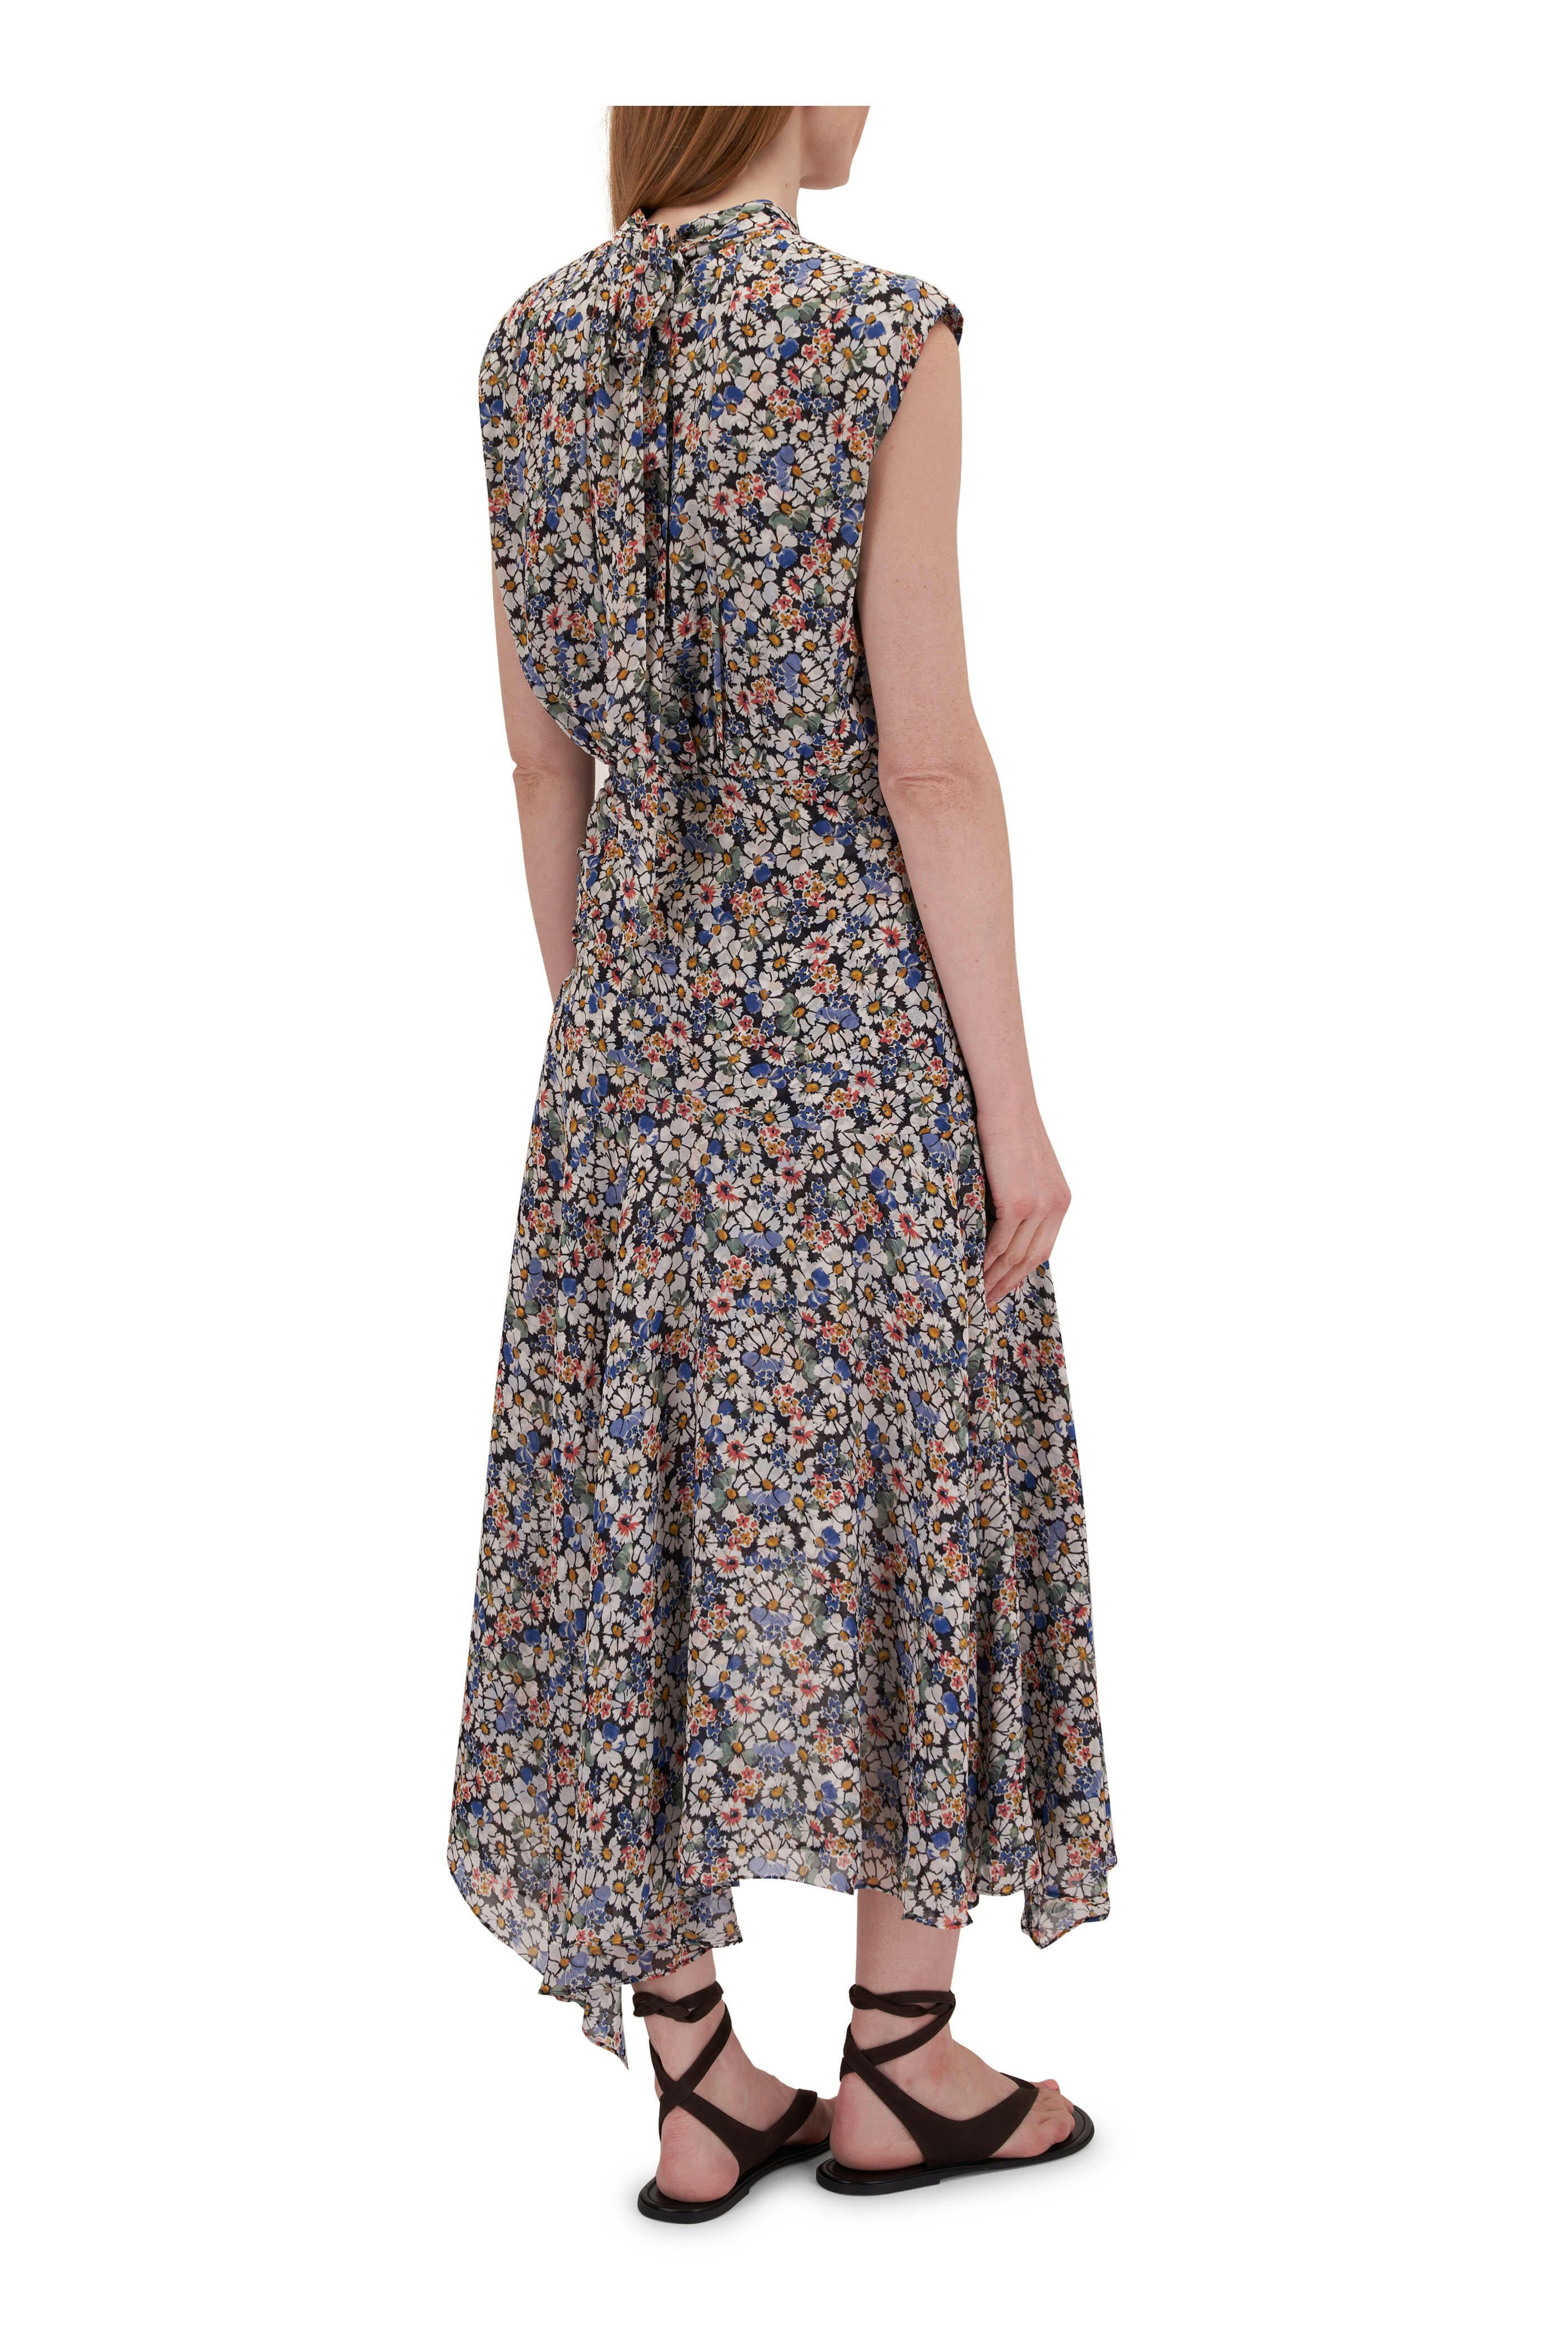 Veronica Beard - Anuli Black Multi Floral Silk Midi Dress